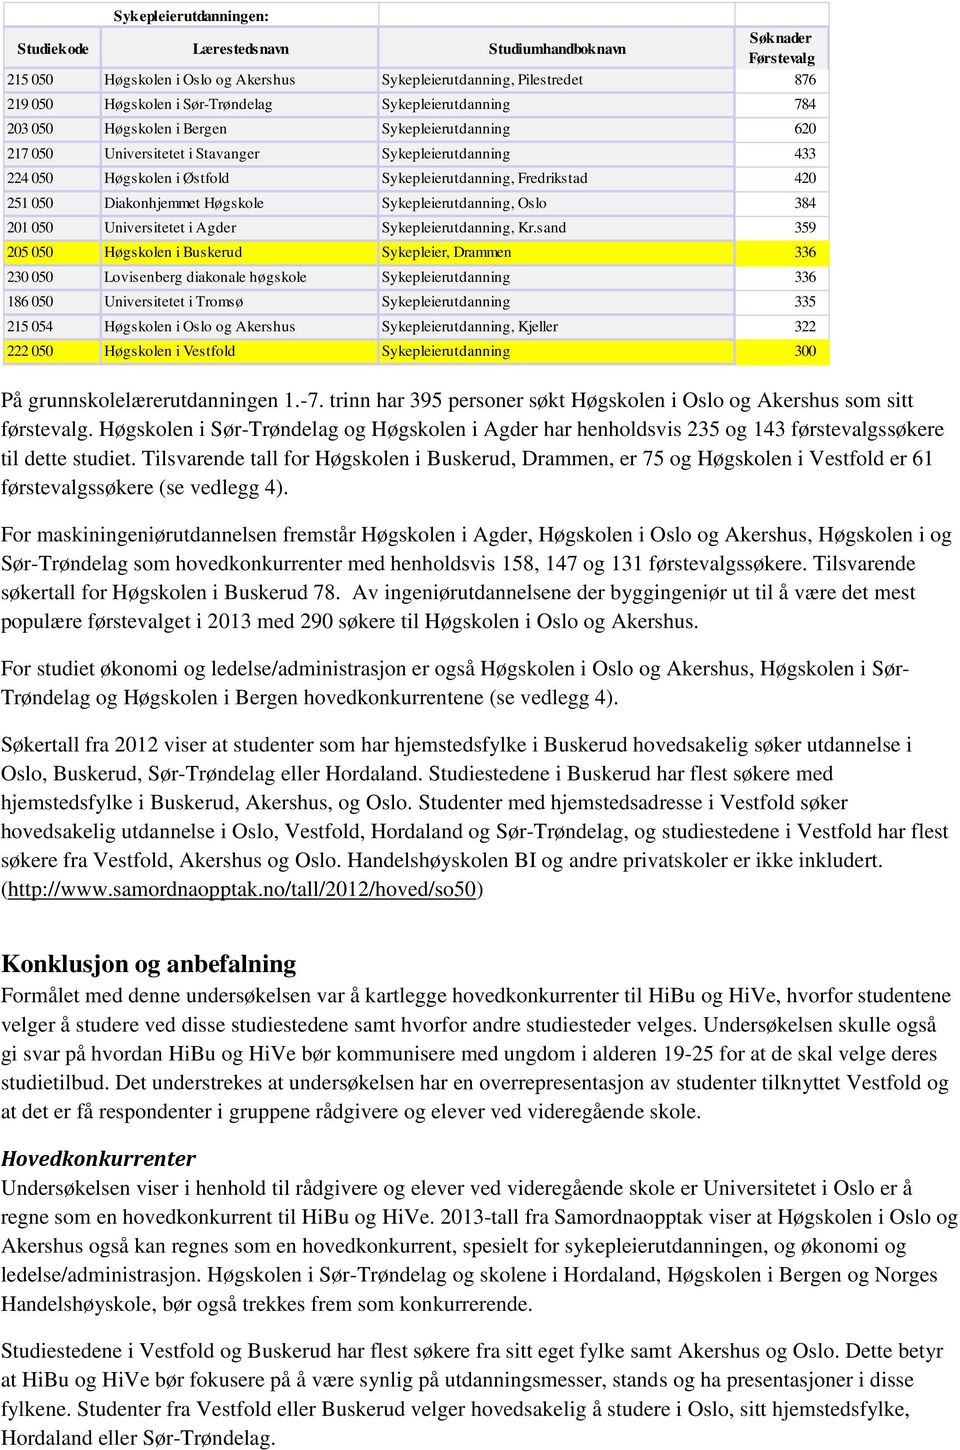 251 050 Diakonhjemmet Høgskole Sykepleierutdanning, Oslo 384 201 050 Universitetet i Agder Sykepleierutdanning, Kr.